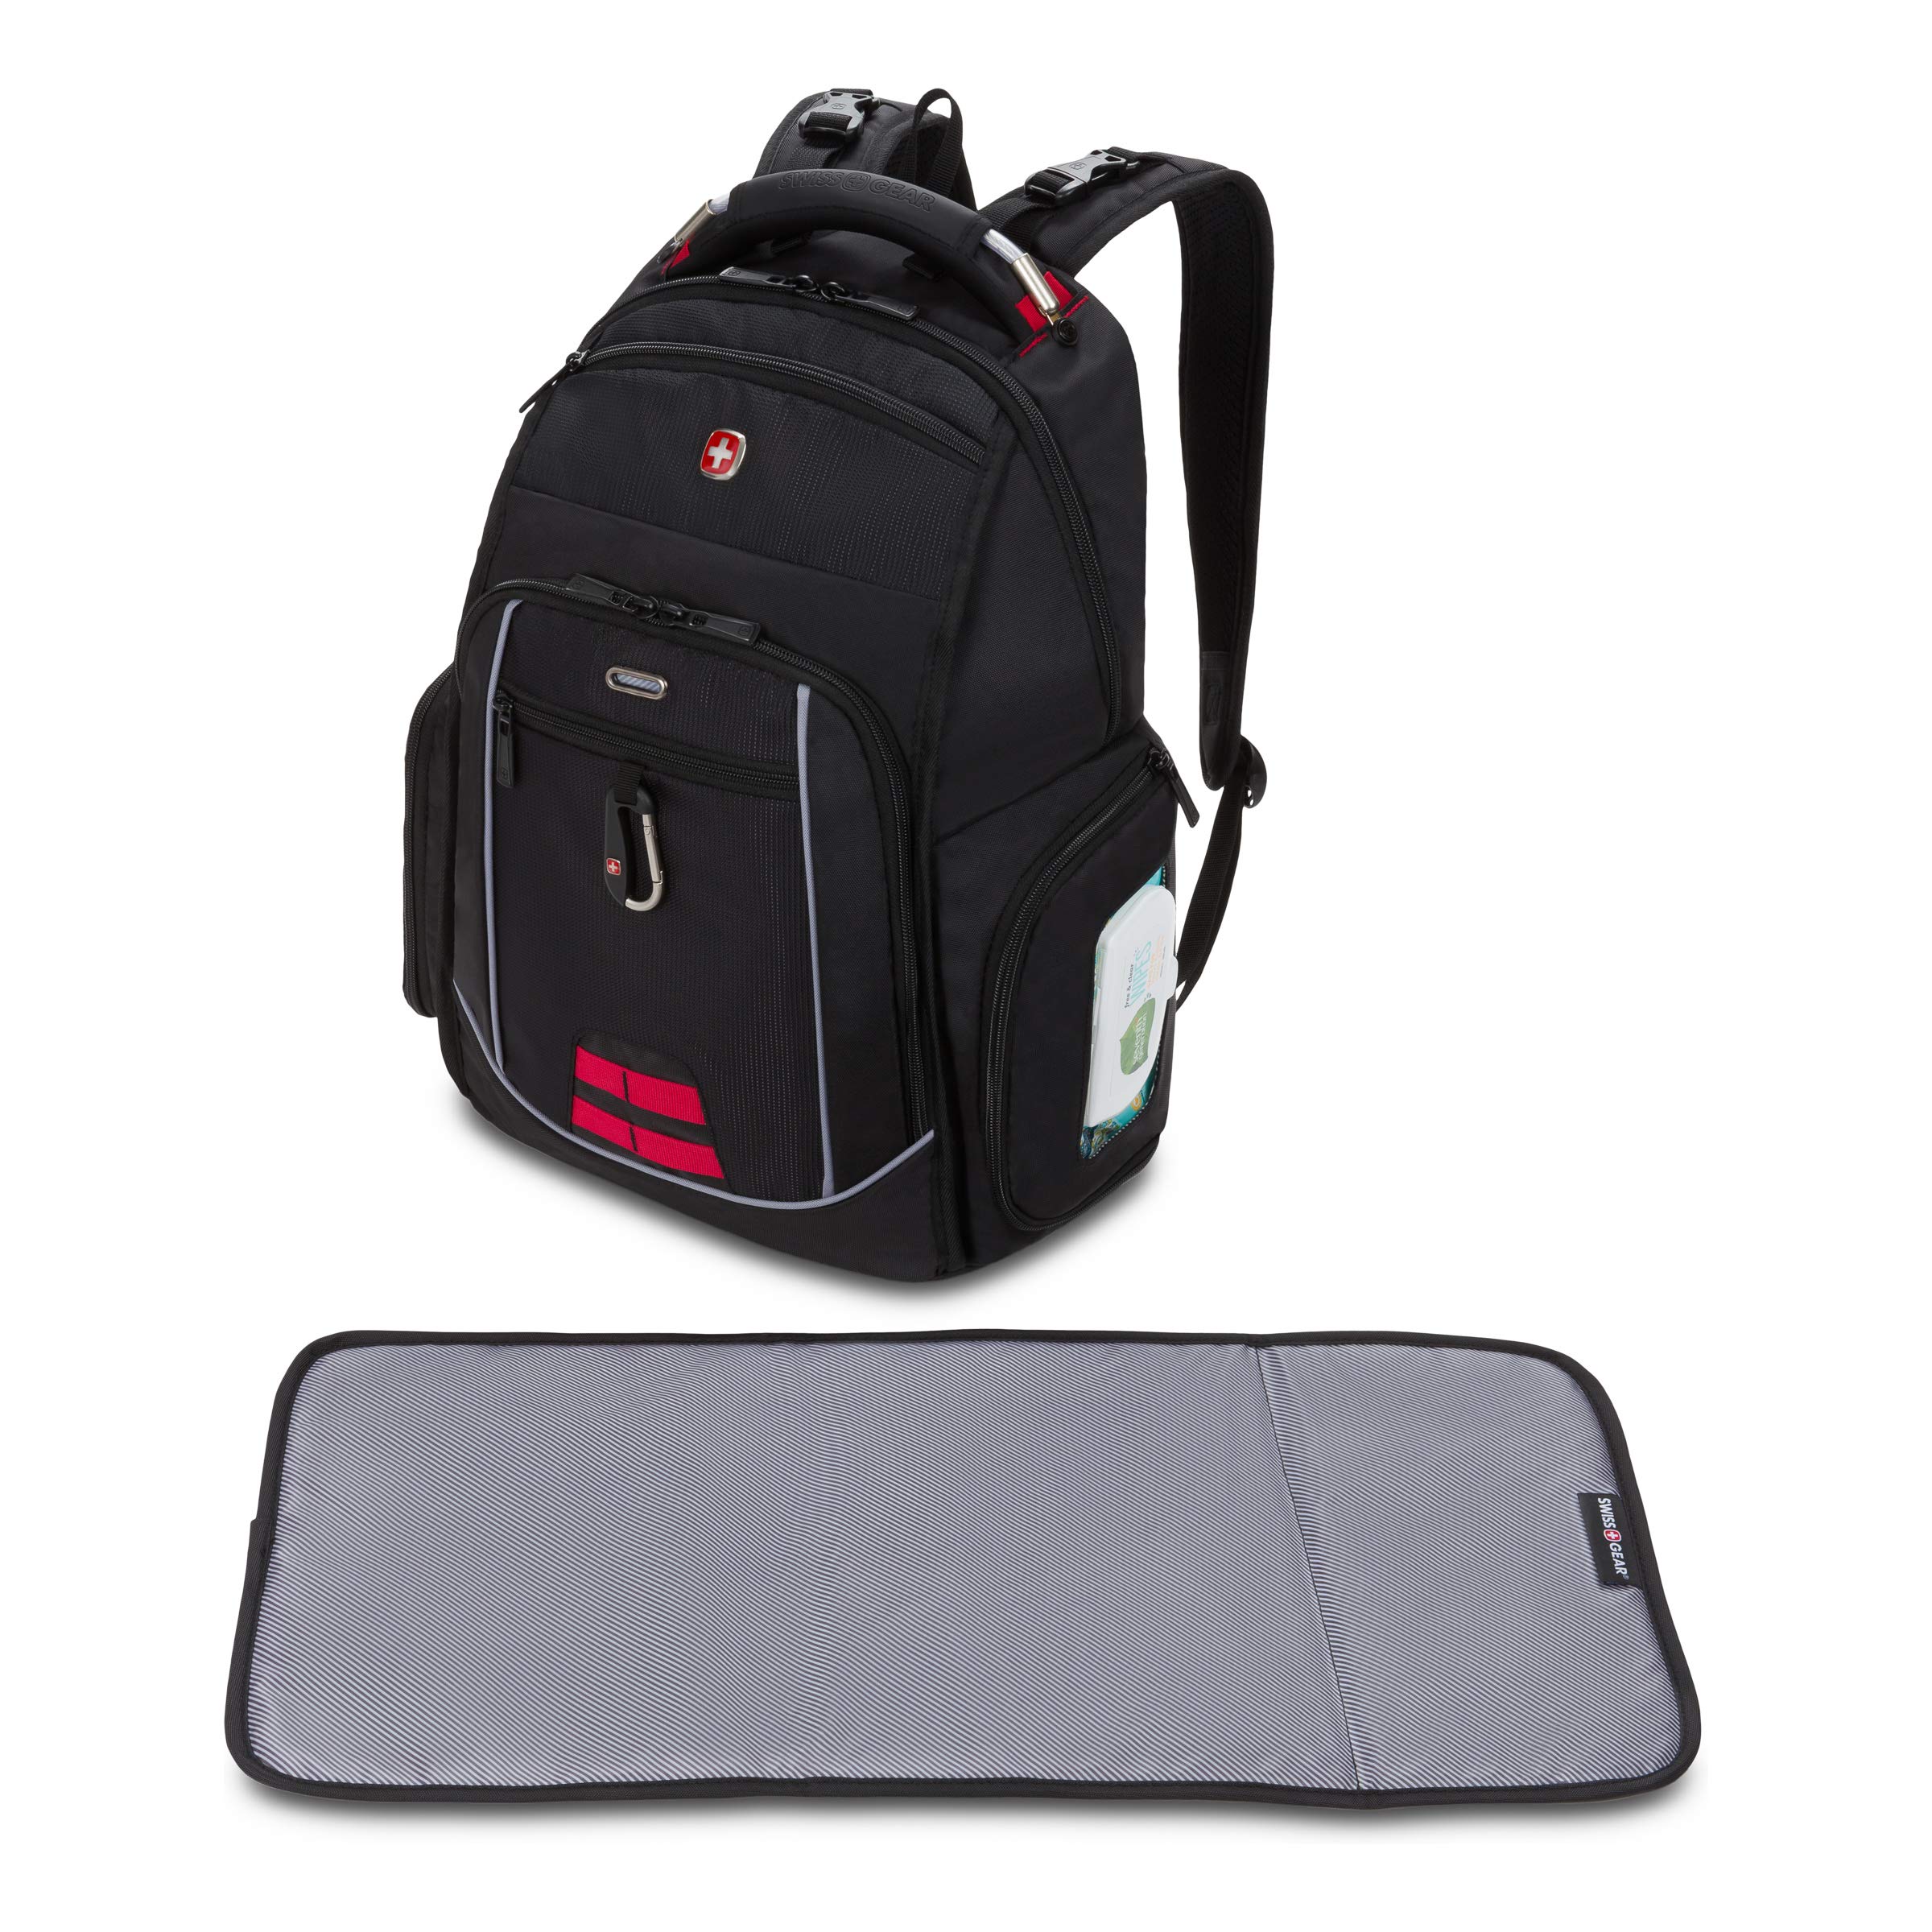 SwissGear Travel Diaper Bag Backpack, Black, 17.5-Inch